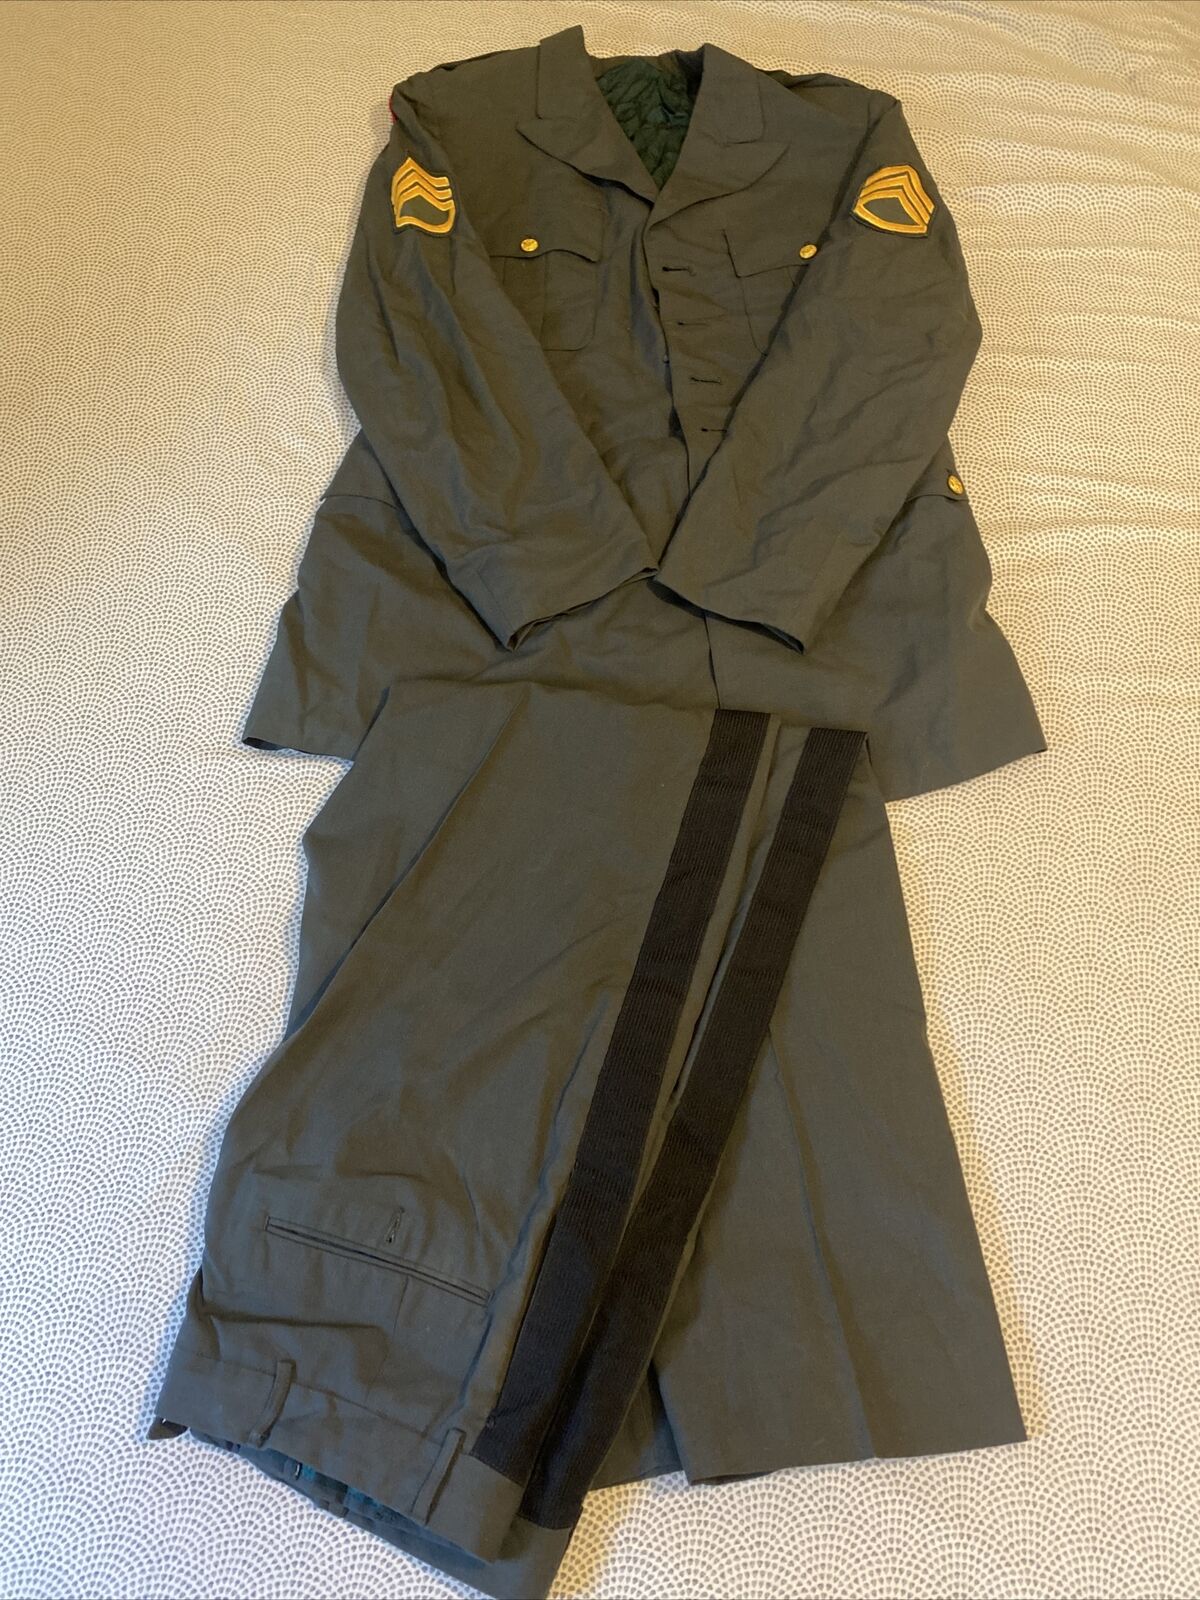 Vintage US Army Sergeant Tropical Uniform With Vietnam War Patches